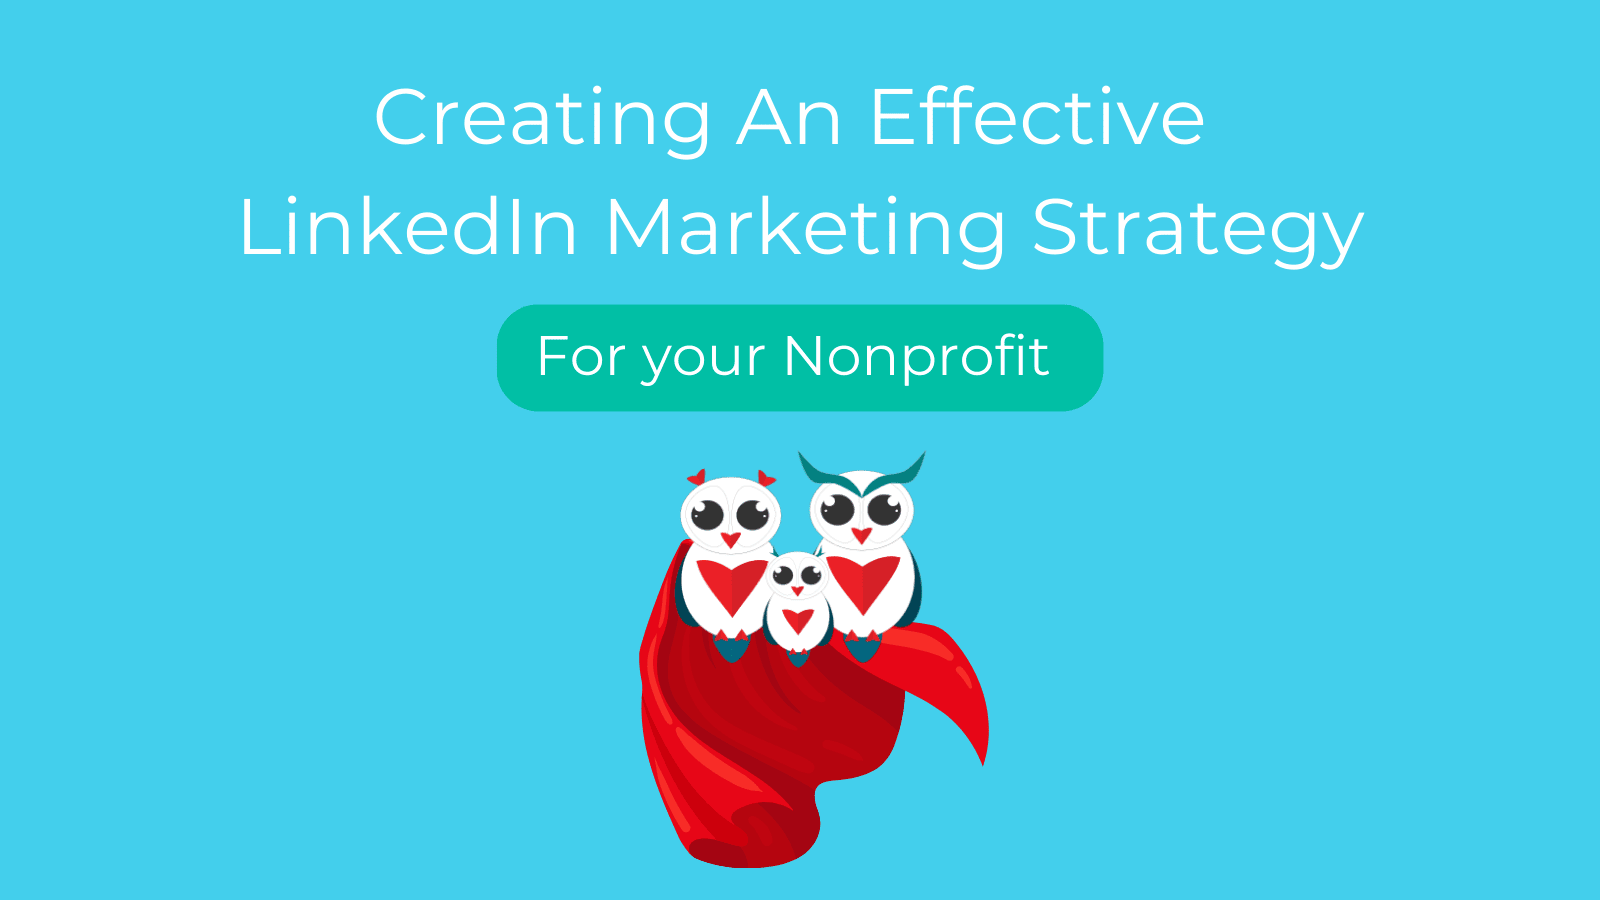 Creating An Effective Nonprofit LinkedIn Marketing Strategy